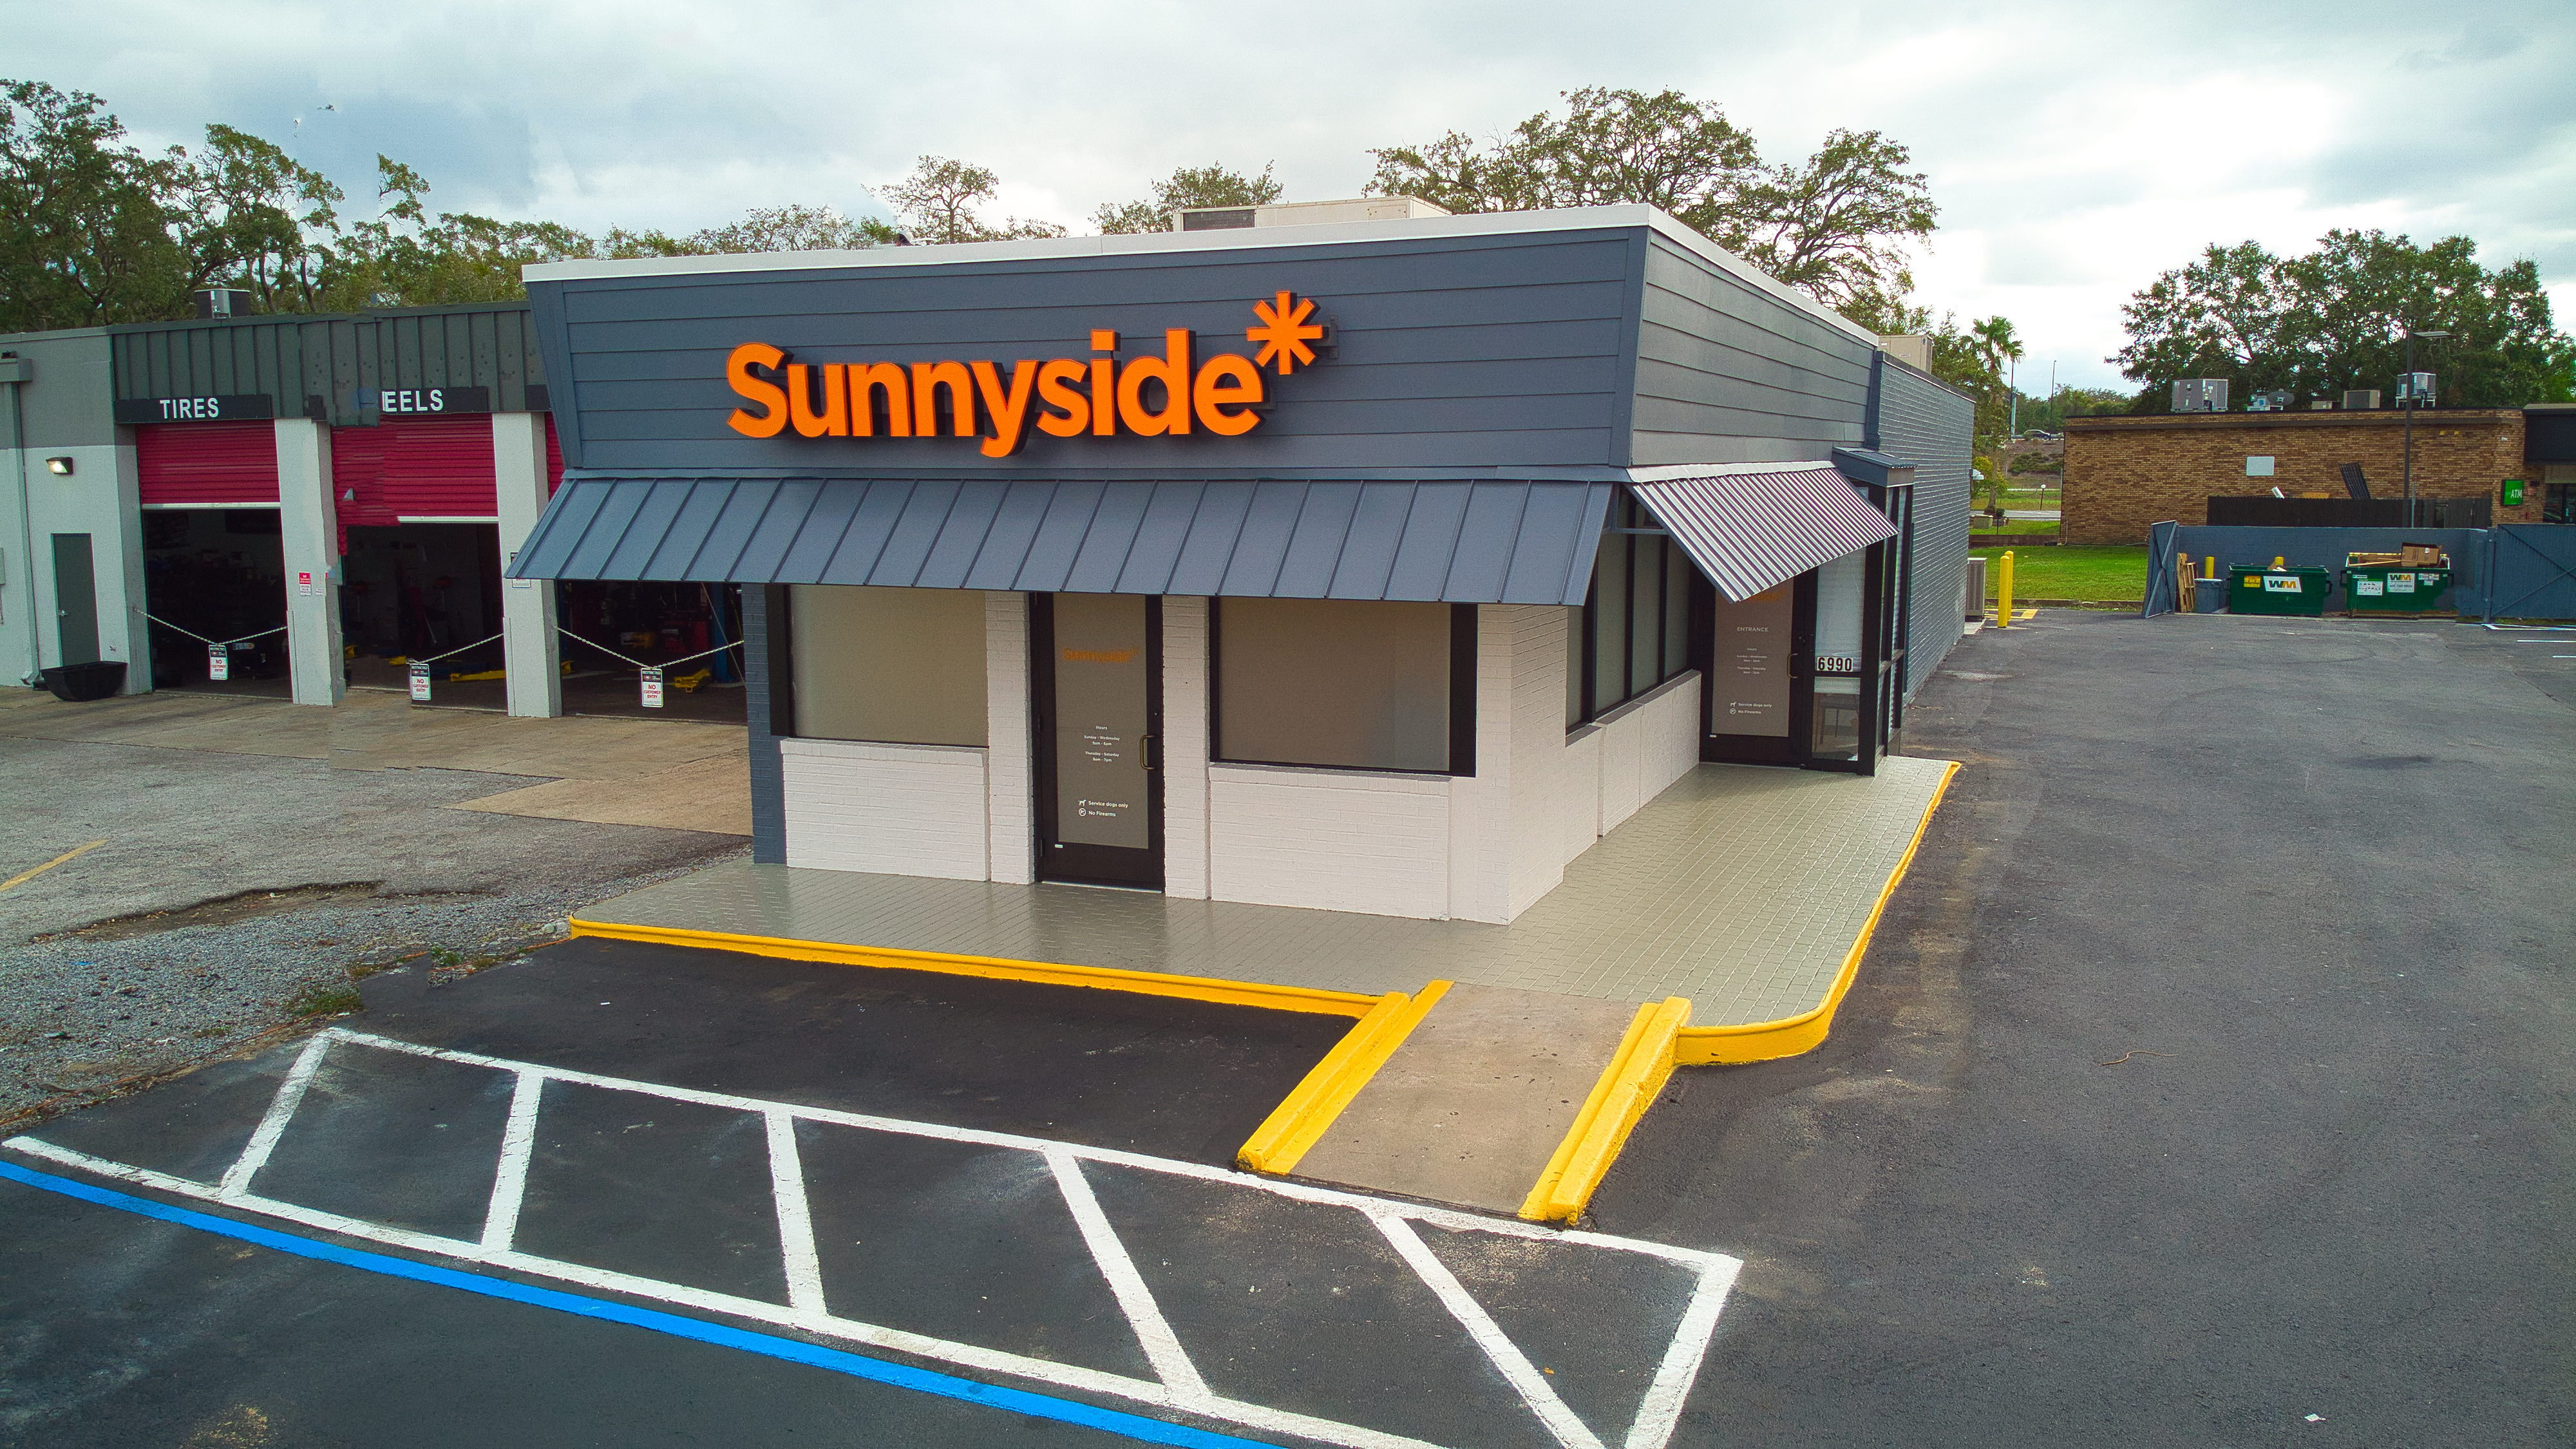 Sunnyside Medical Cannabis Dispensary Orlando - West